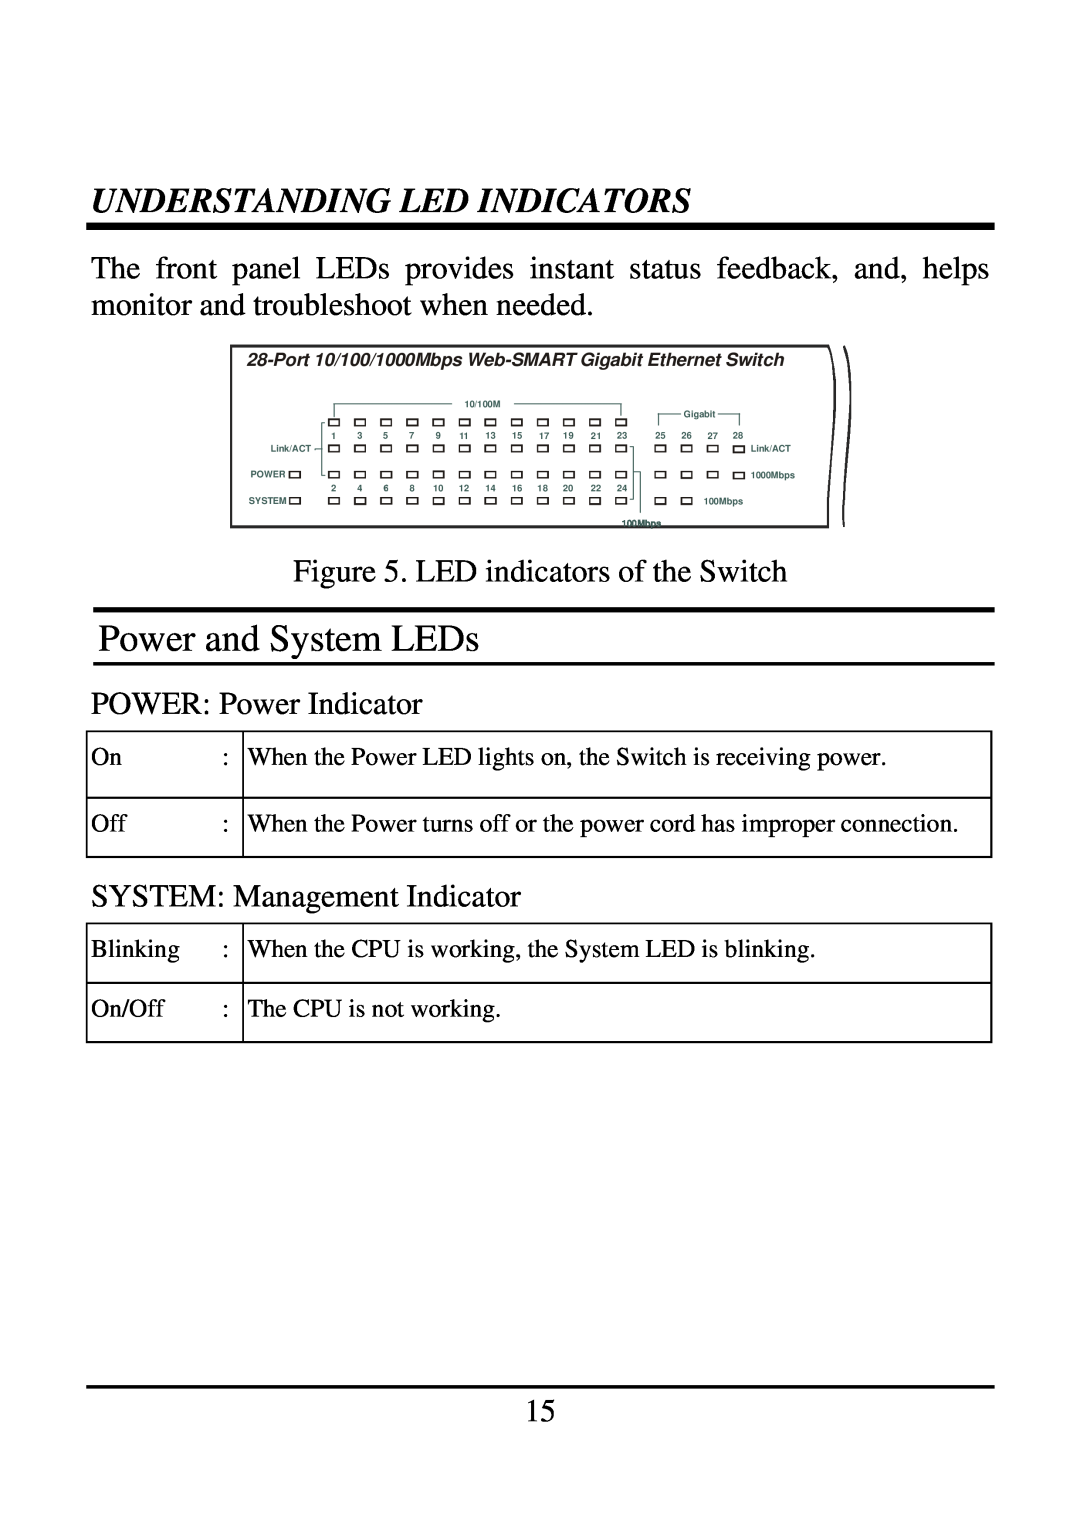 TRENDnet 21000BASE-T, 2410/100BASE-TX manual Power and System LEDs, Understanding Led Indicators 